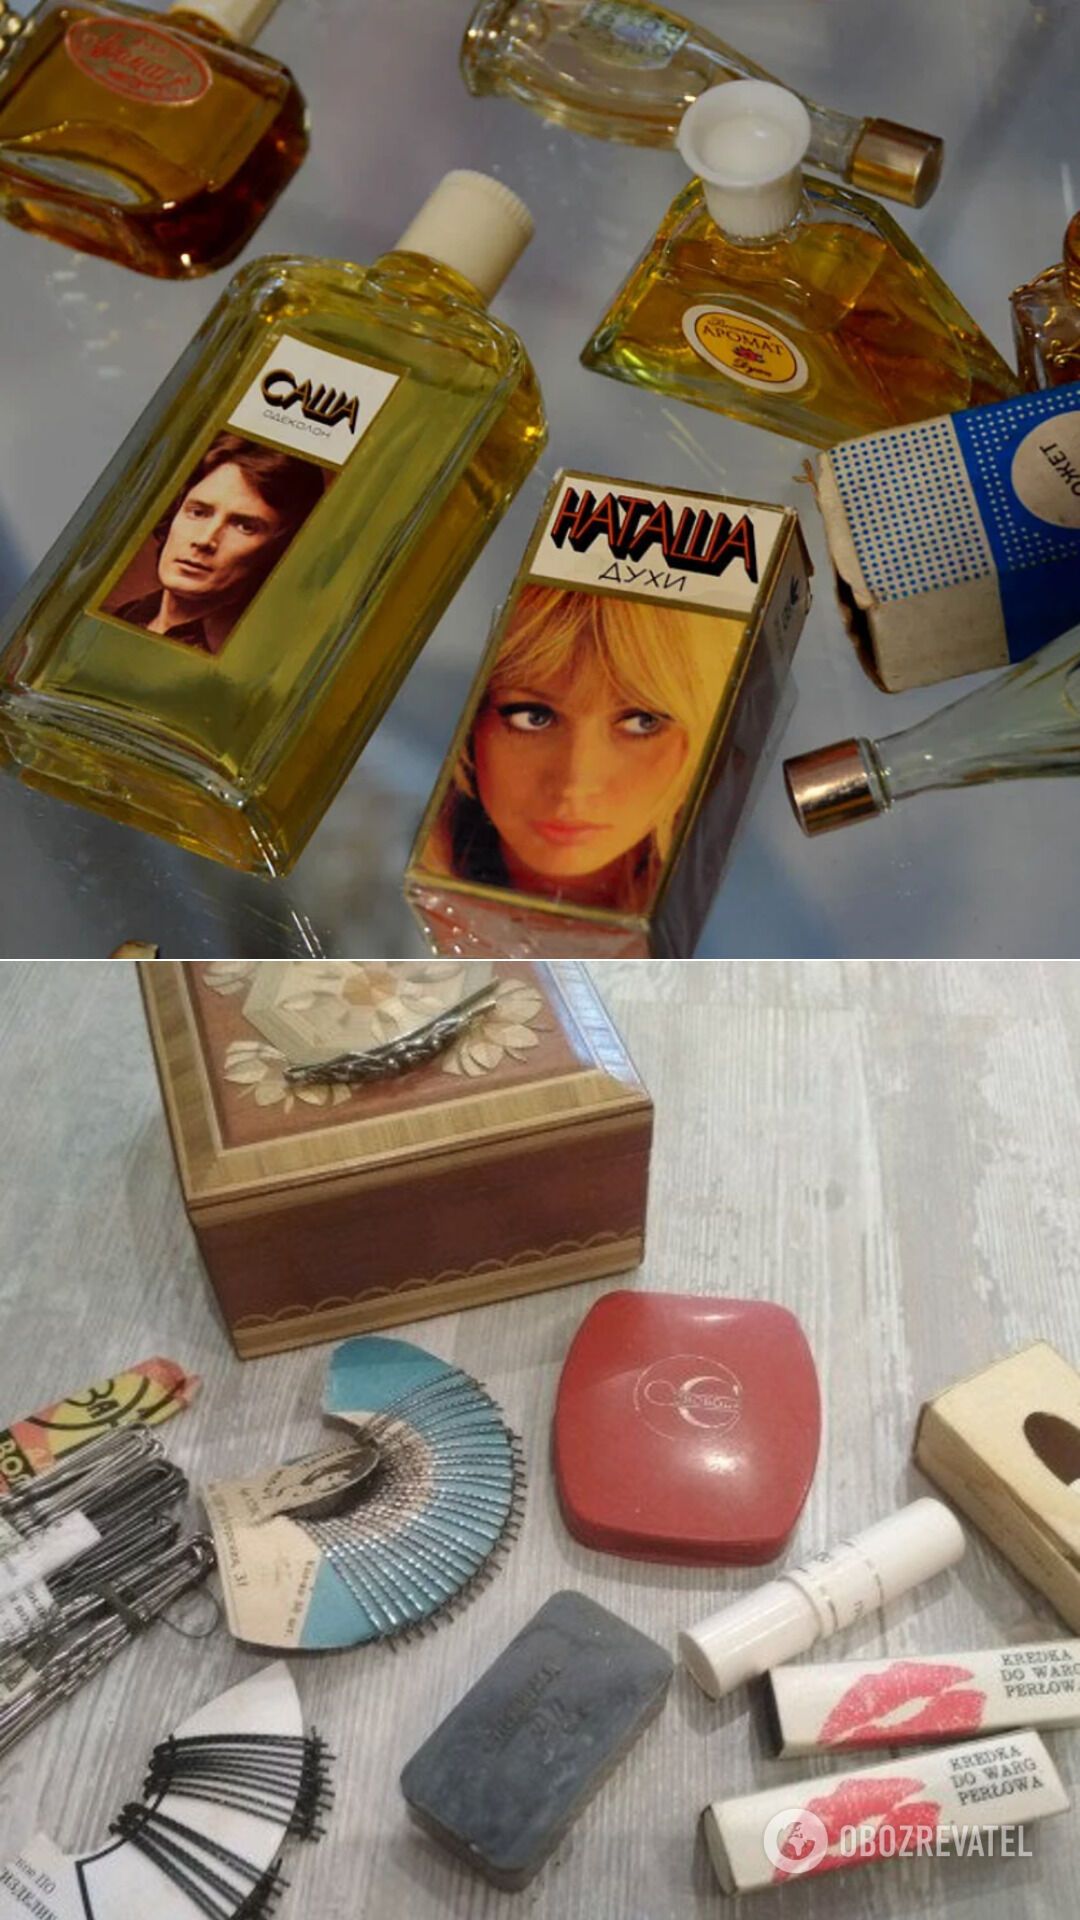 Одеколон "Саша" і парфуми "Наташа", а також інша косметика з СРСР